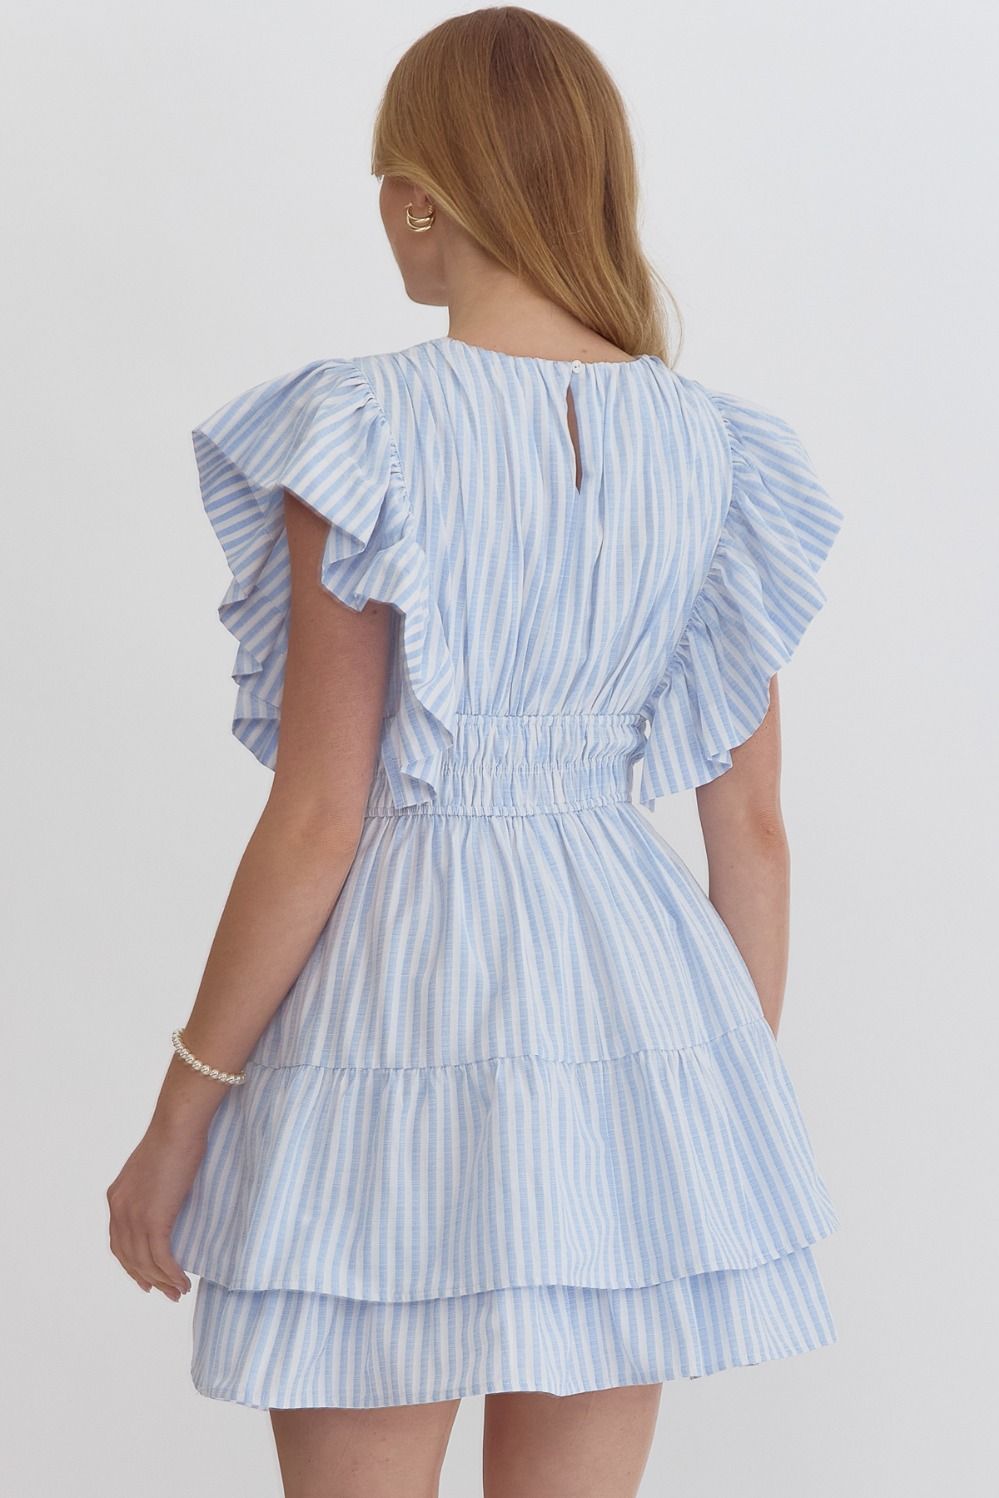 Blue Stripe print v-neck sleeveless mini dress featuring ruffle detail at shoulders